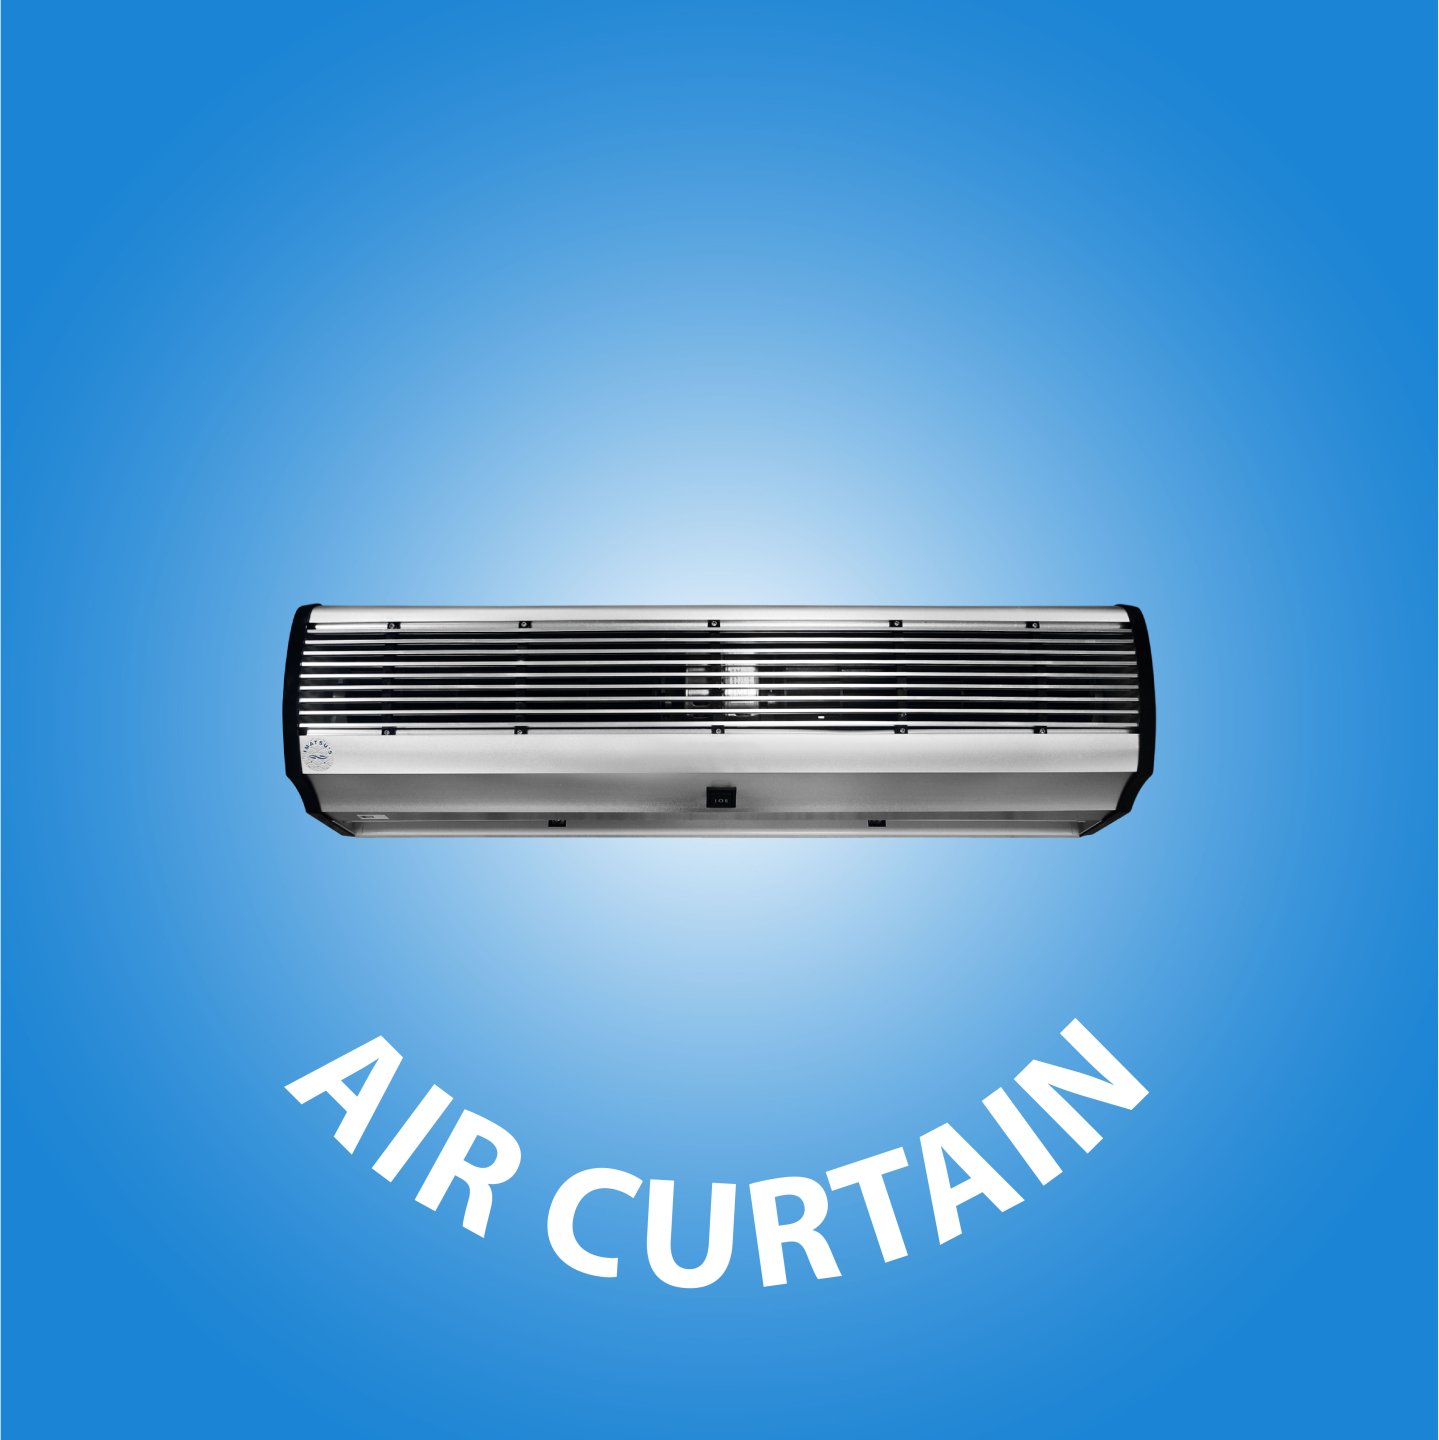  Air Curtain cover kategori website 03